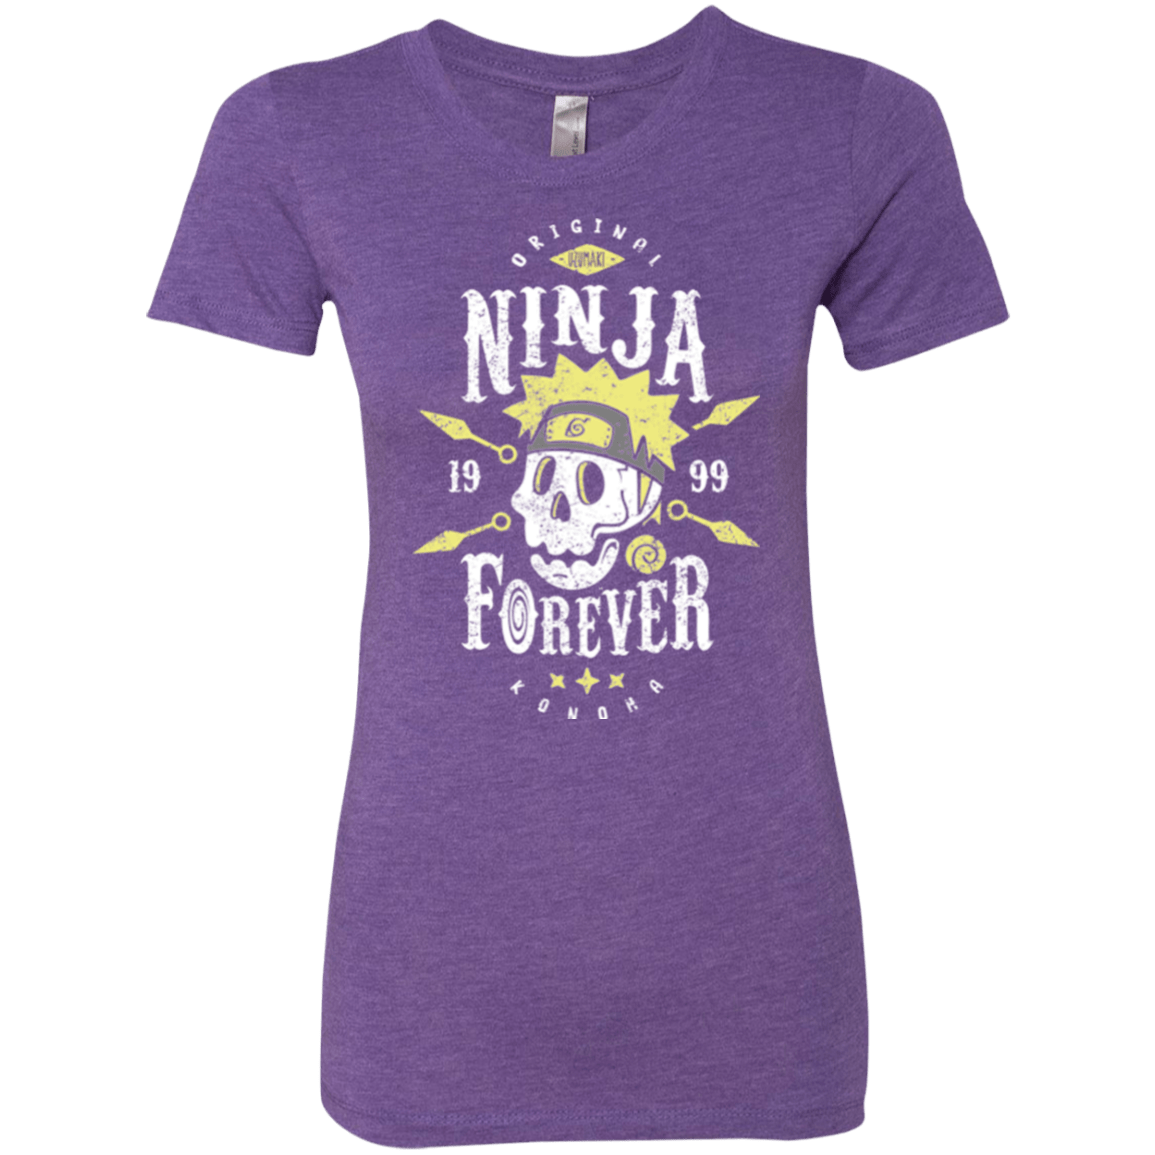 T-Shirts Purple Rush / Small Ninja Forever Women's Triblend T-Shirt